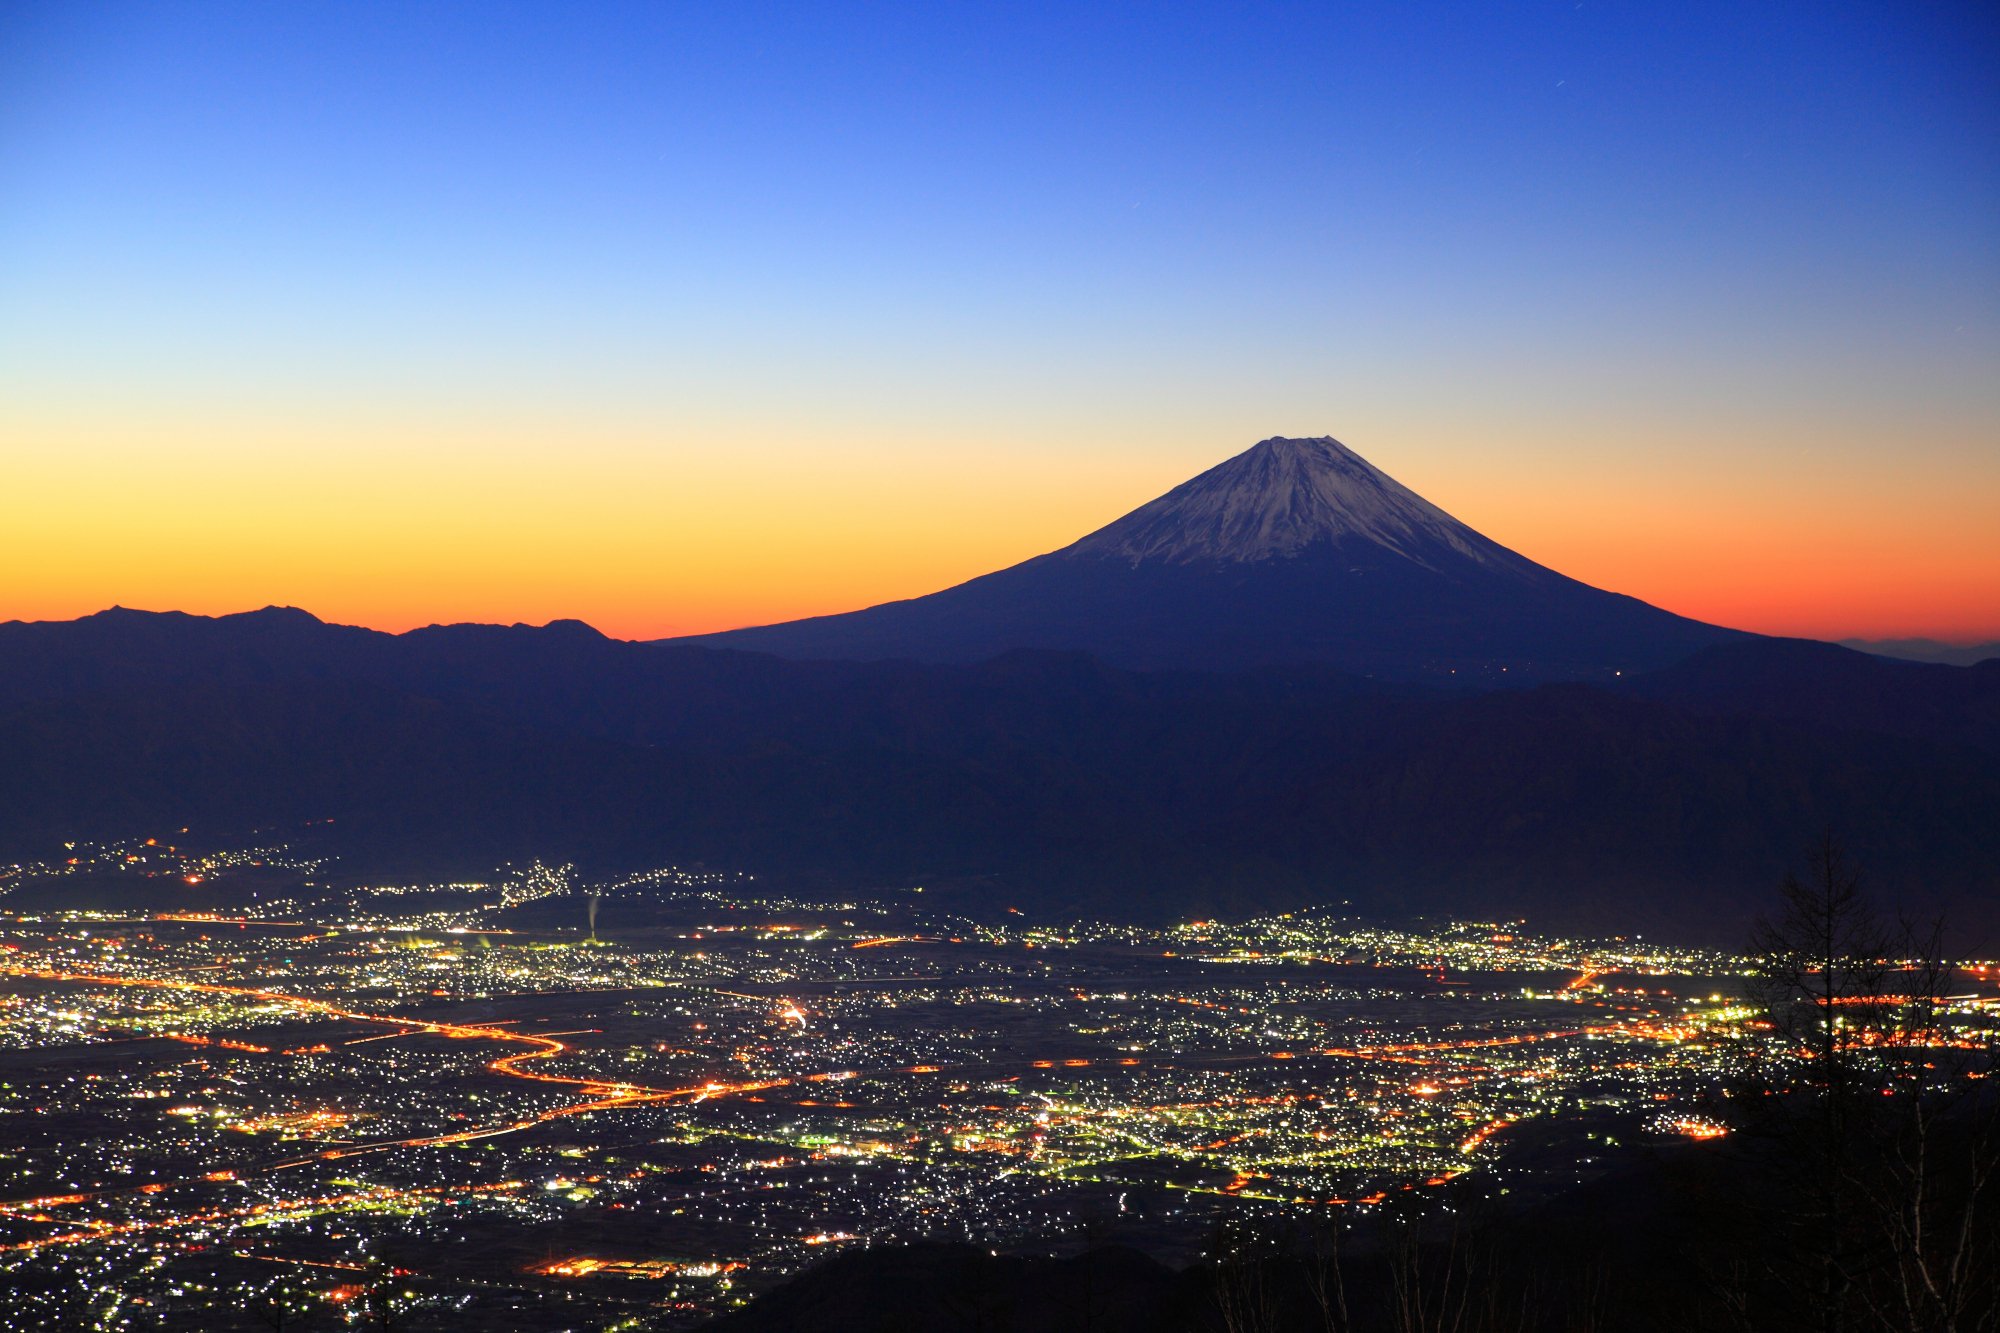 Watch the sun rise over the Kofu basin and the iconic Mount Fuji